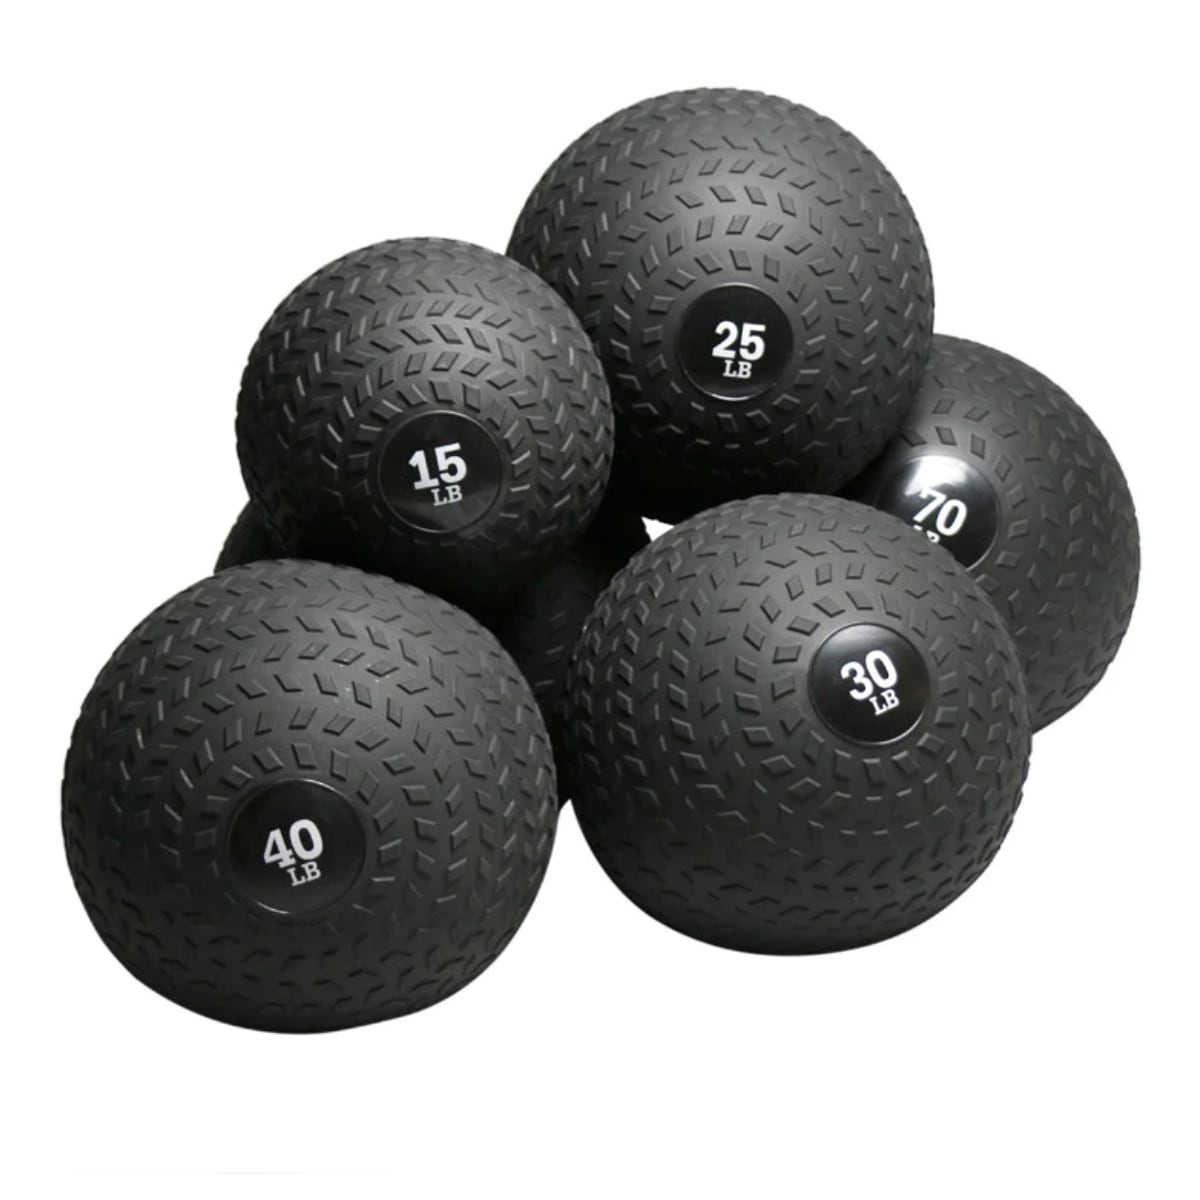 Brug American barbell AmericanBarbell Slam Ball 70 lb til en forbedret oplevelse